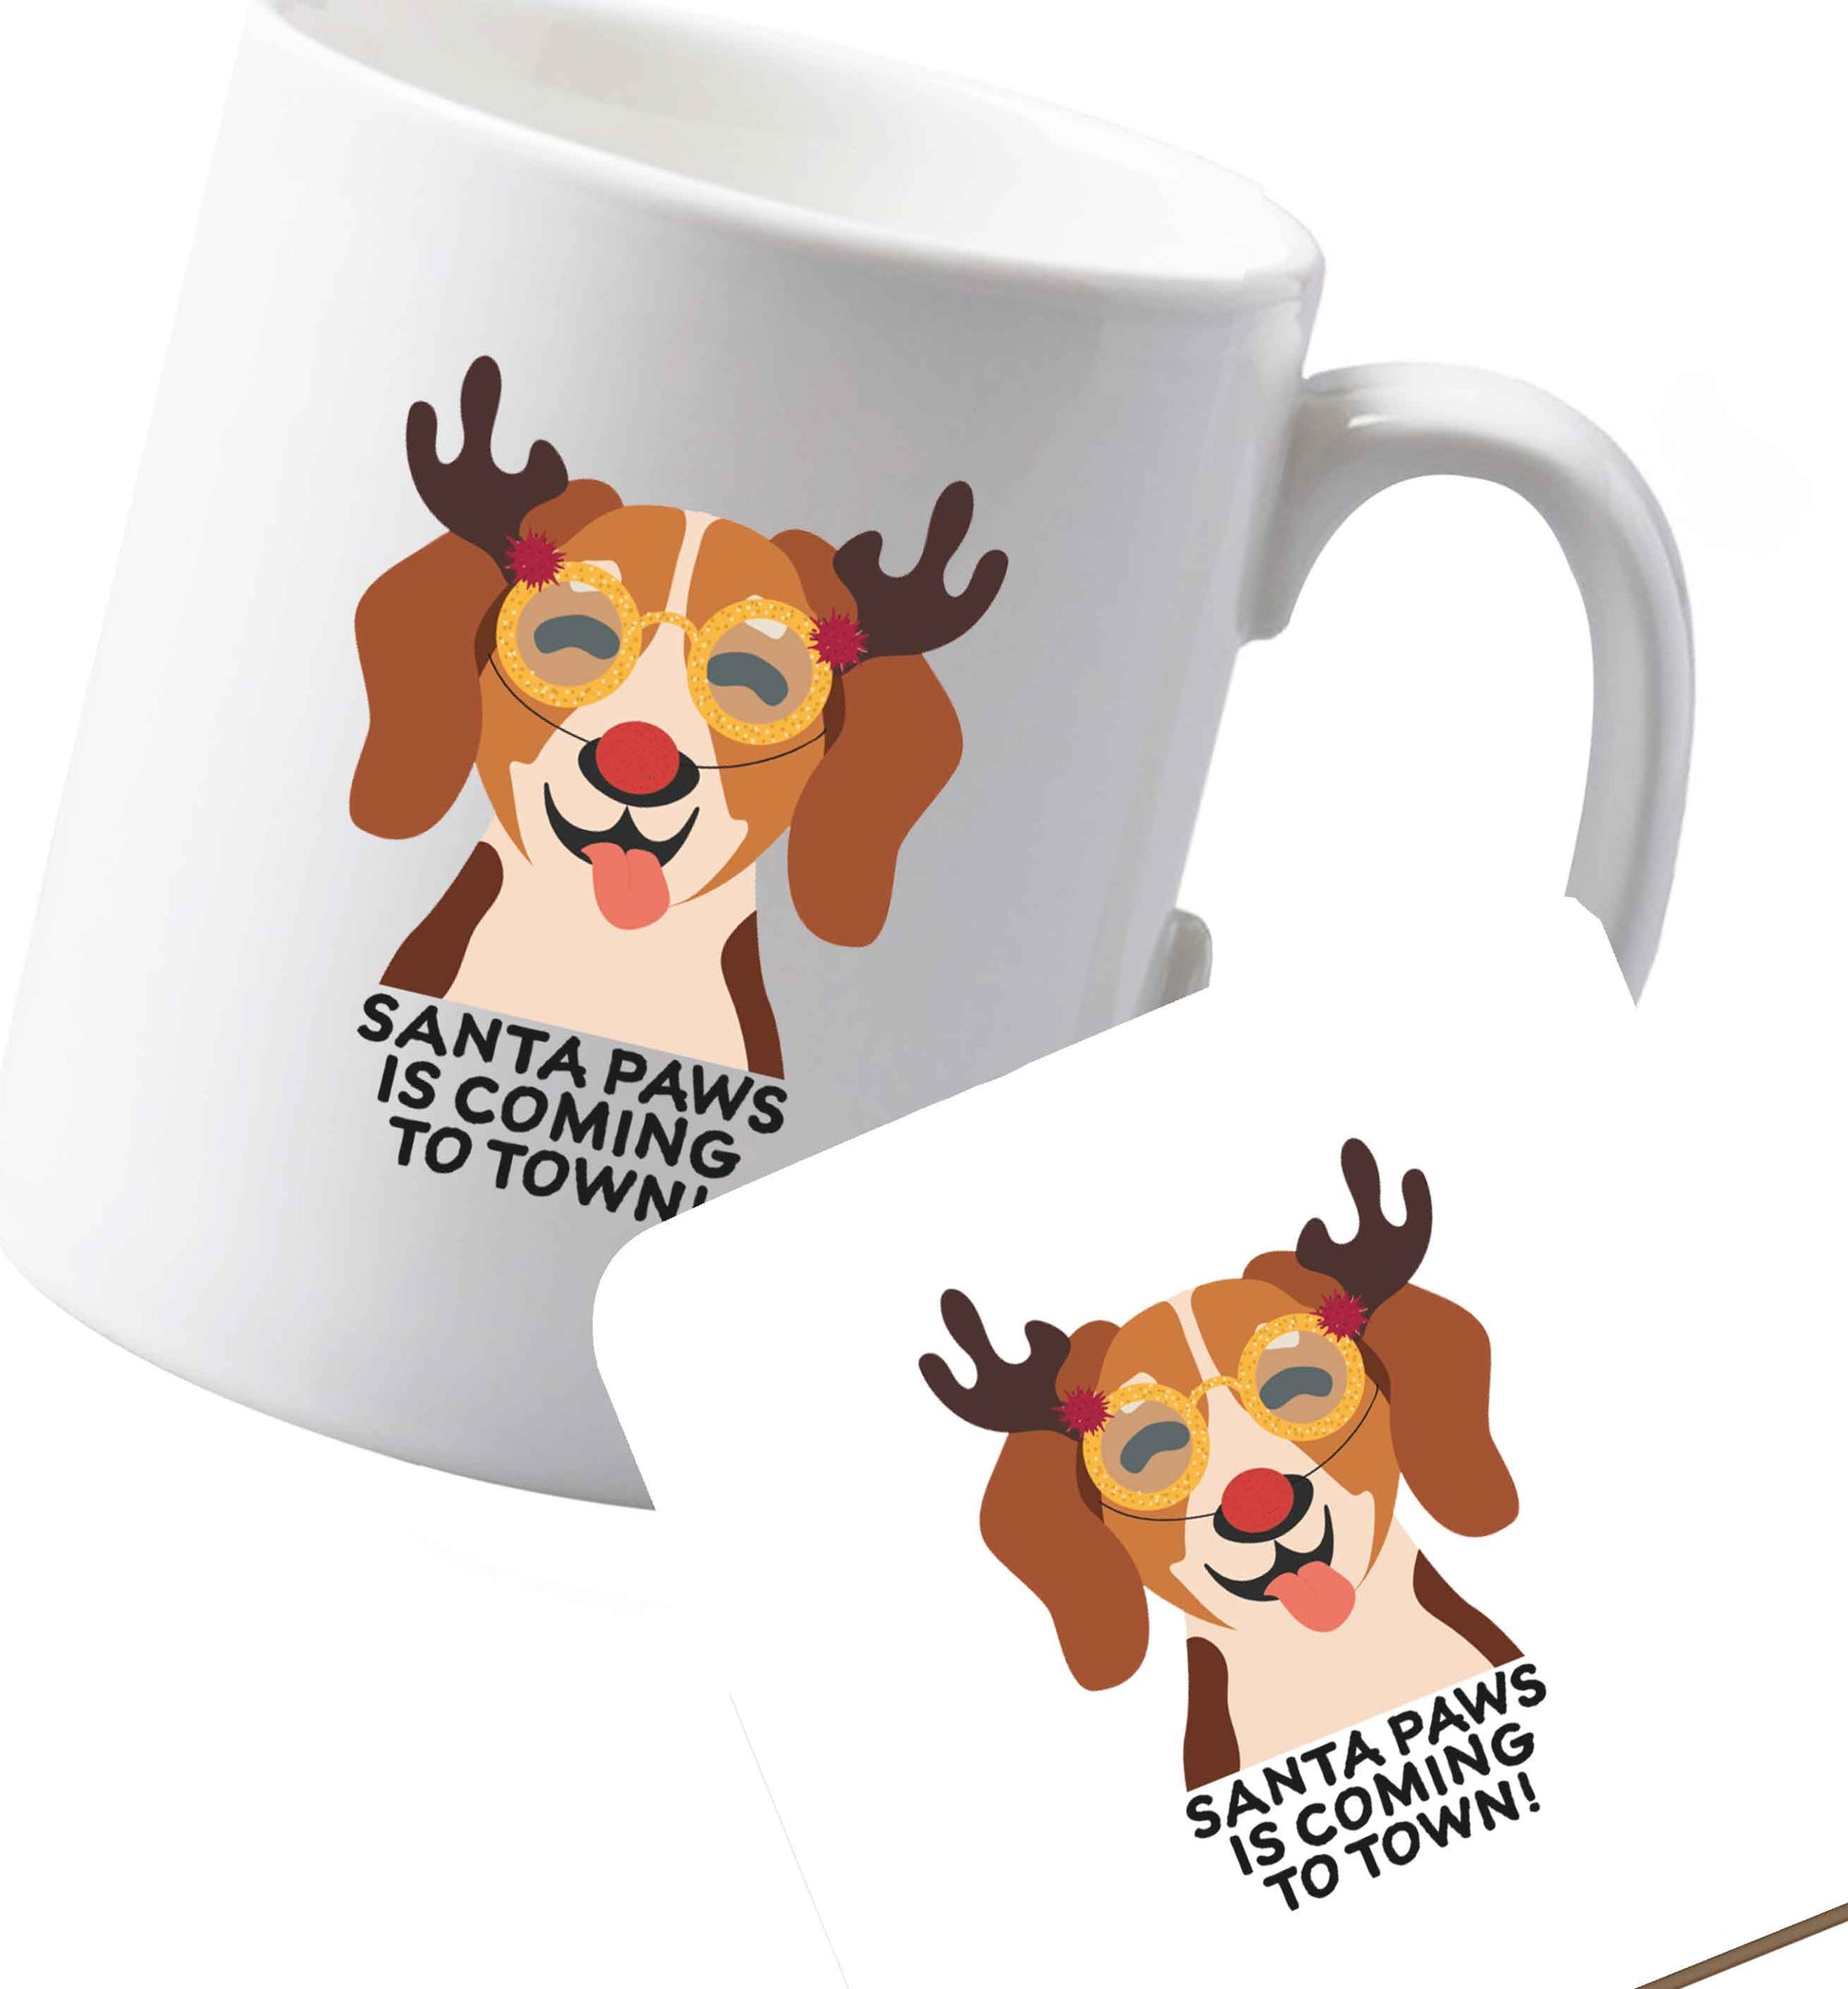 10 oz Ceramic mug and coaster Santa paws is coming to town both sides